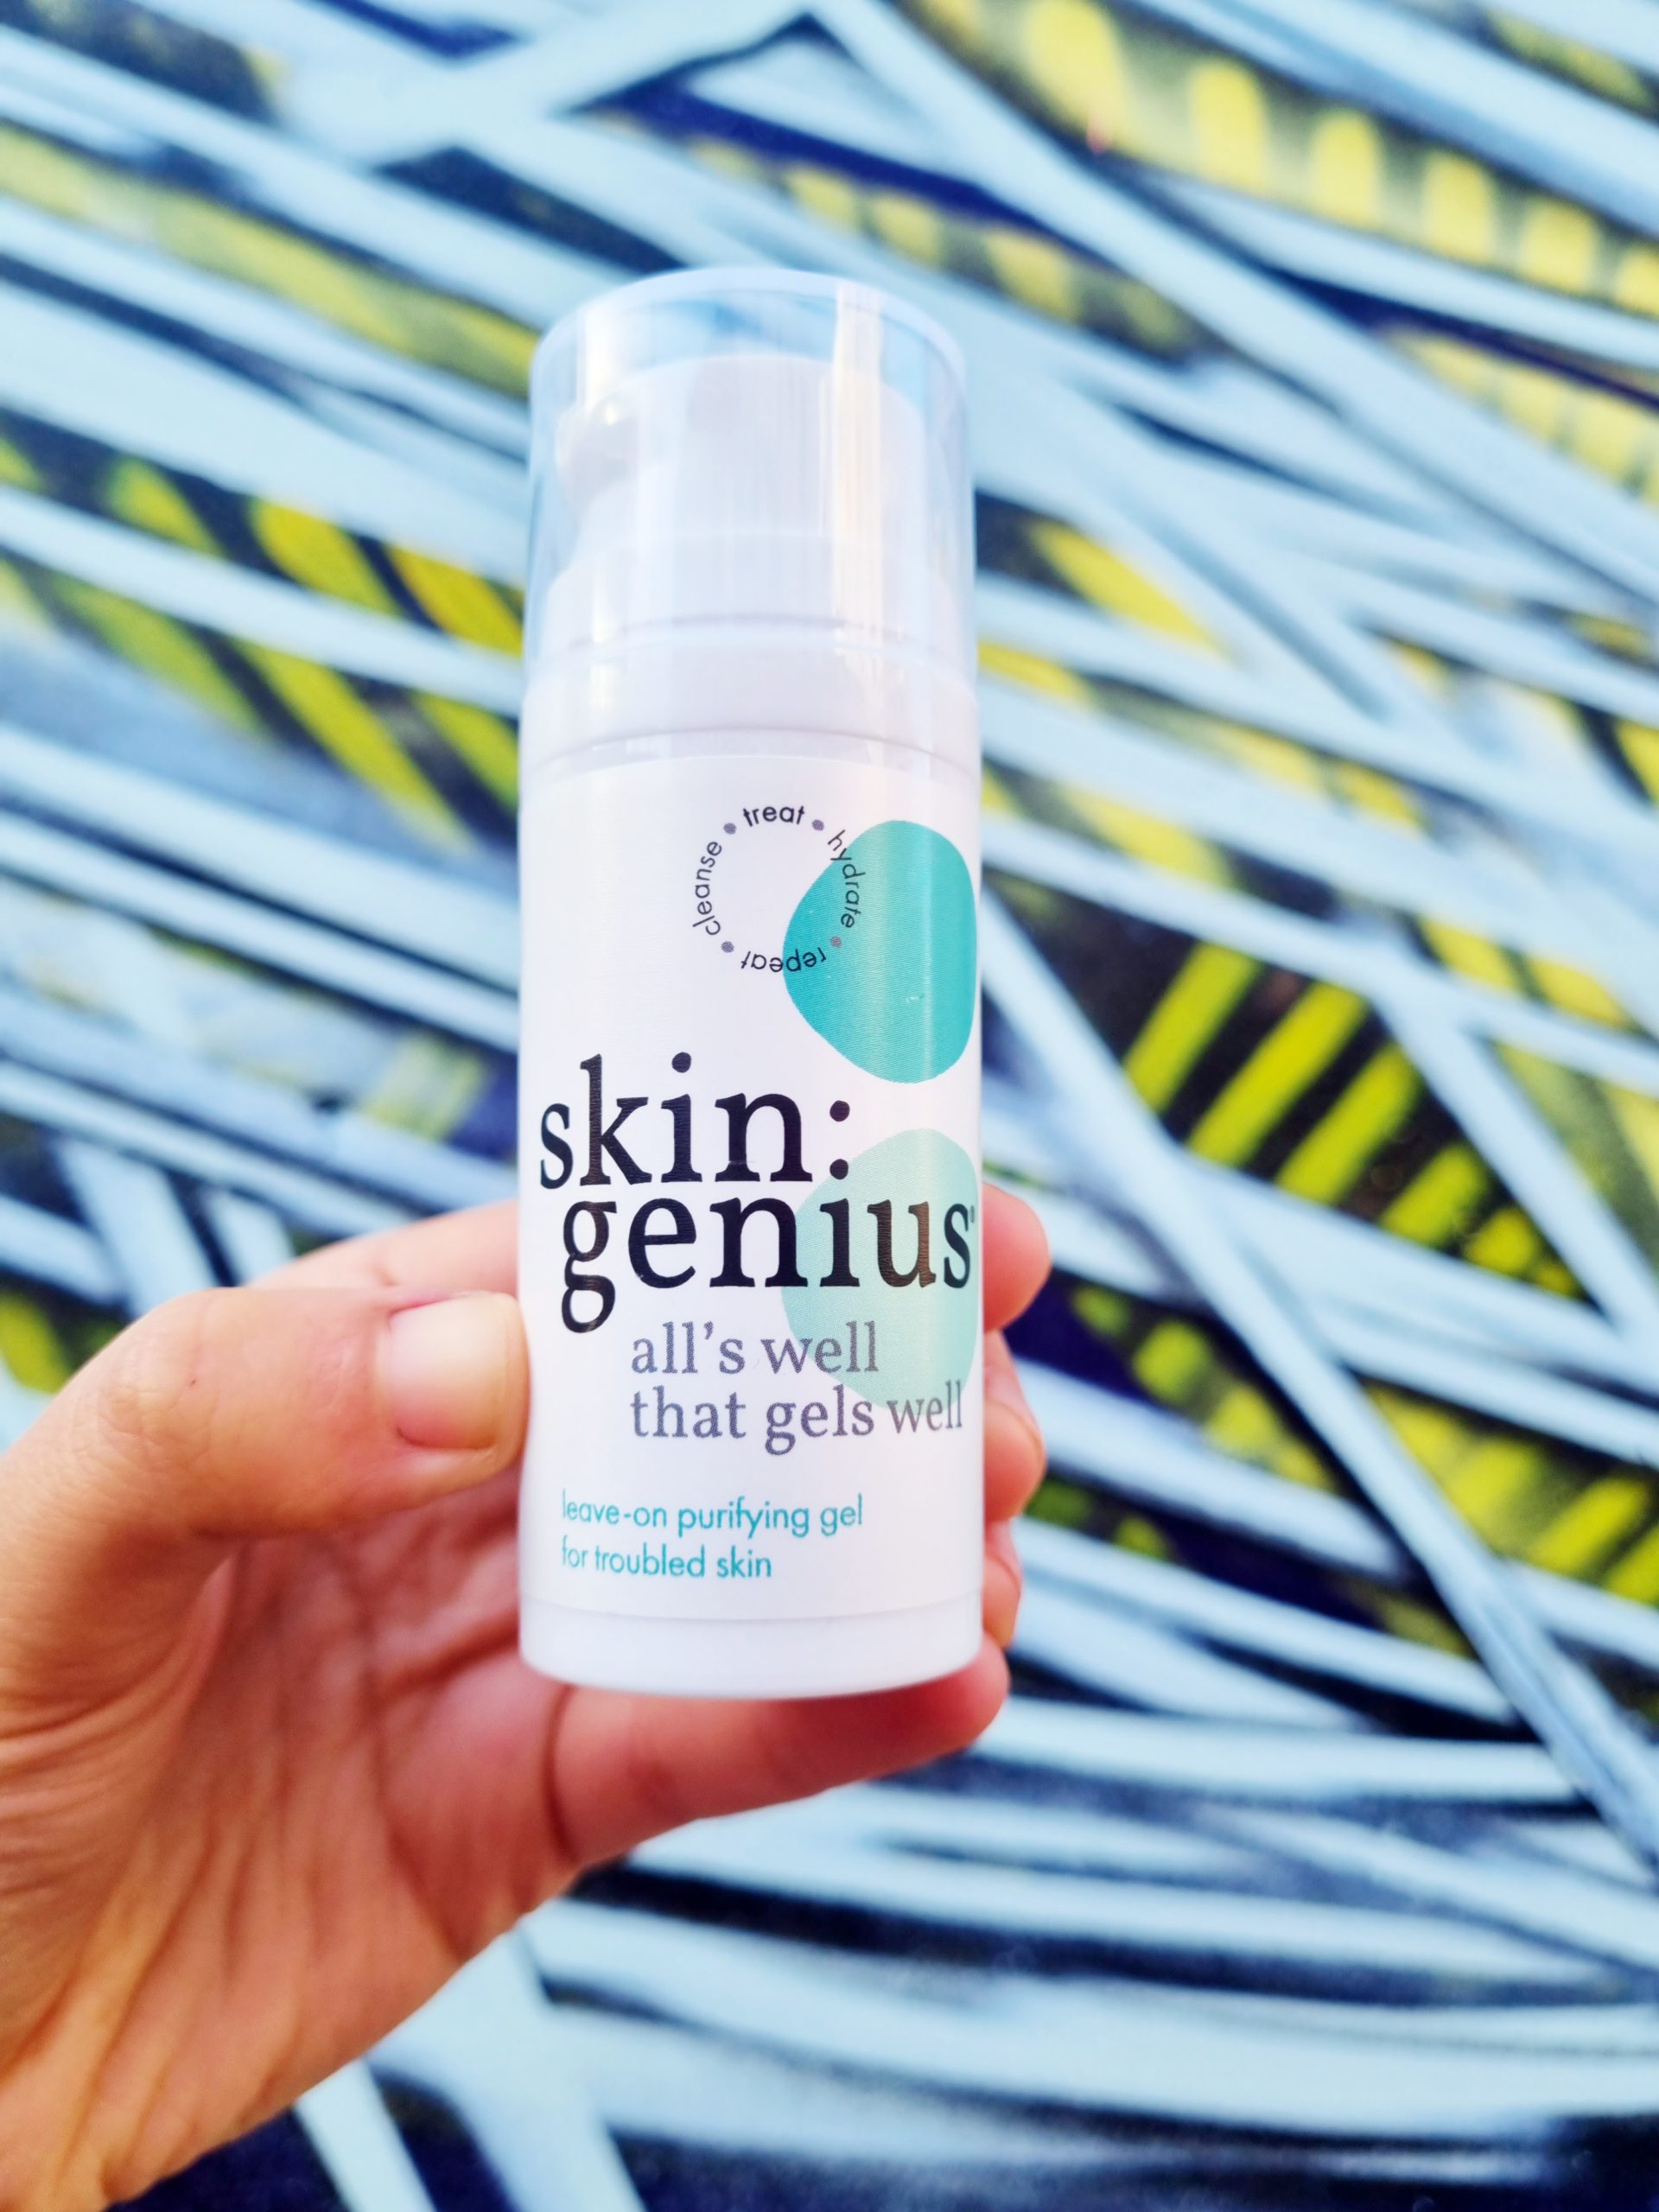 <img src="skin.jpg" alt="skin genius mini vegan beauty gel"/> 